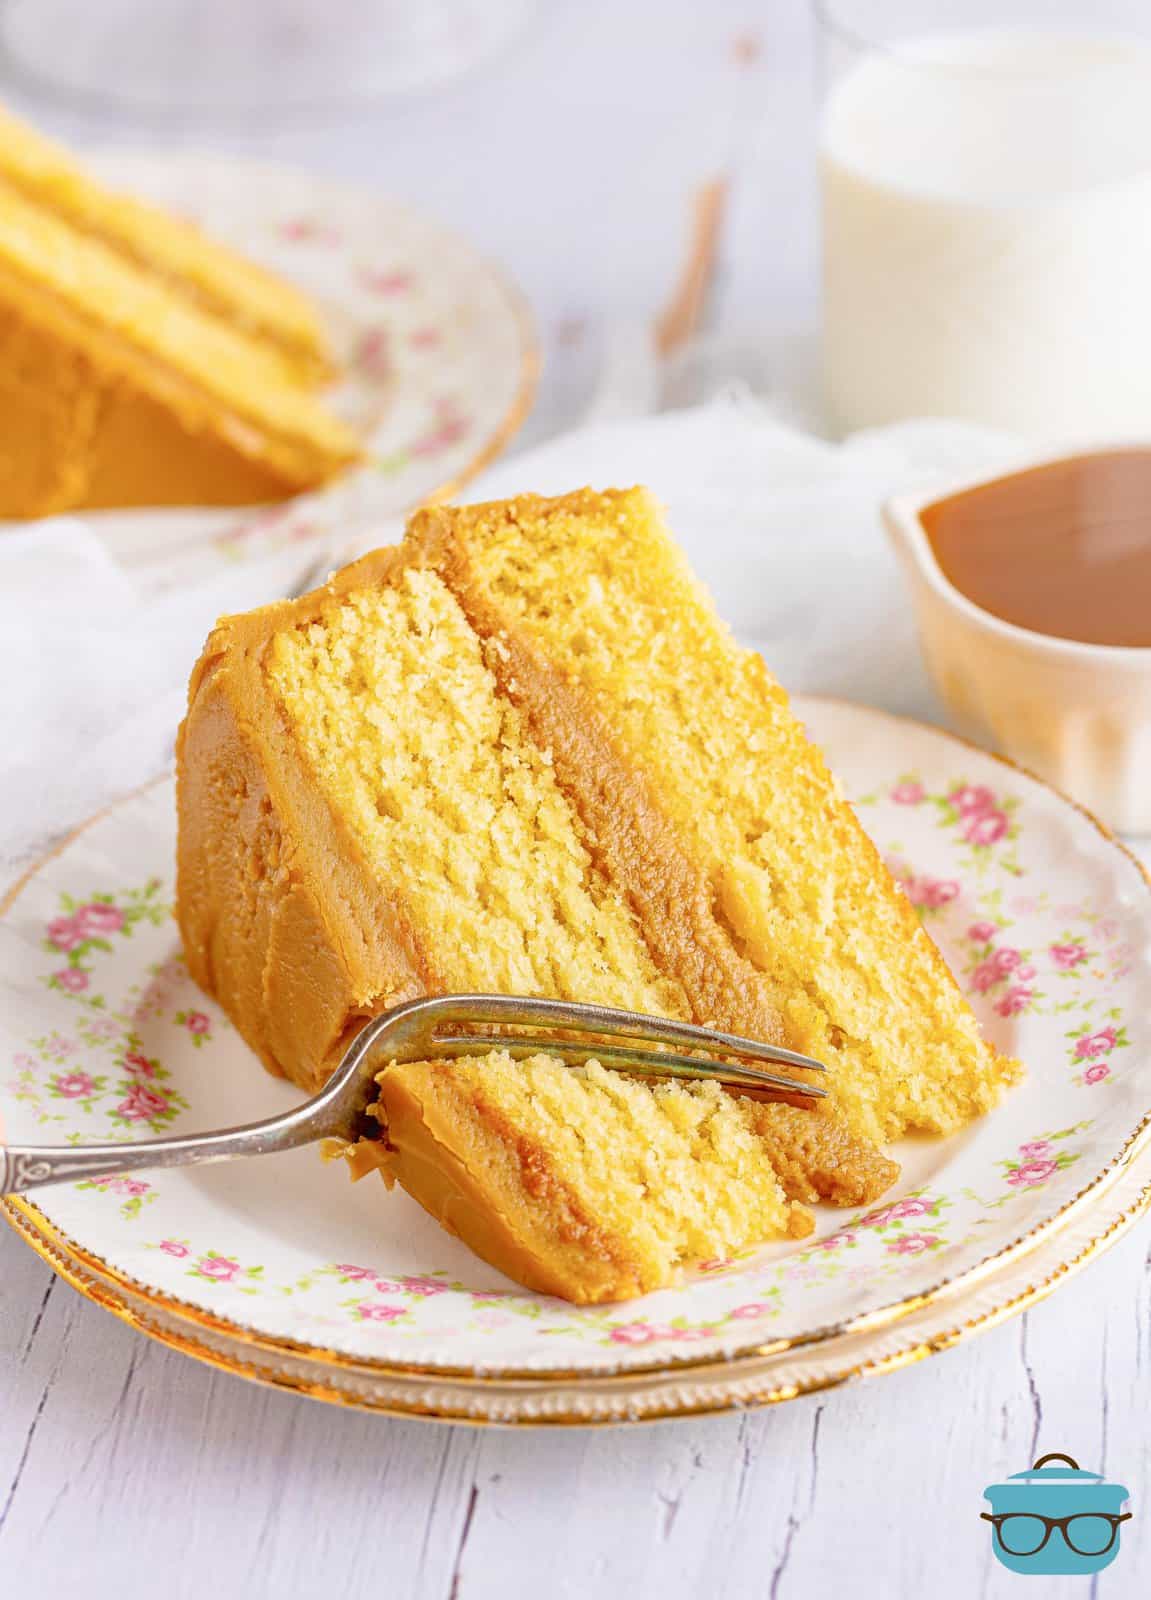 Golden Key Caramel Cake Recipe (video) - The Best Caramel Cake! - Tatyanas  Everyday Food